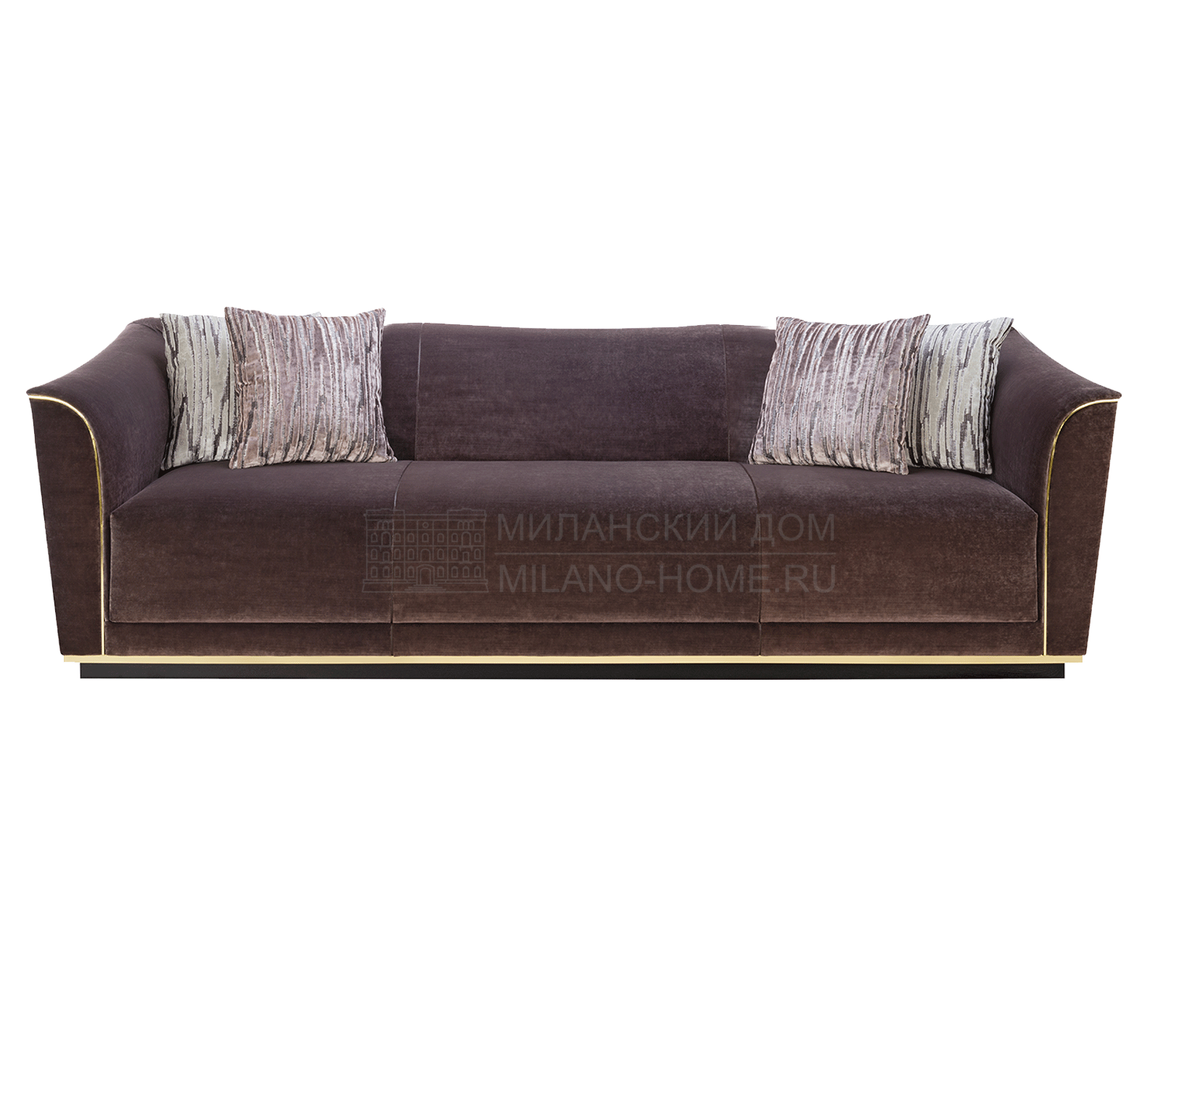 Прямой диван Dover sofa из Португалии фабрики FRATO